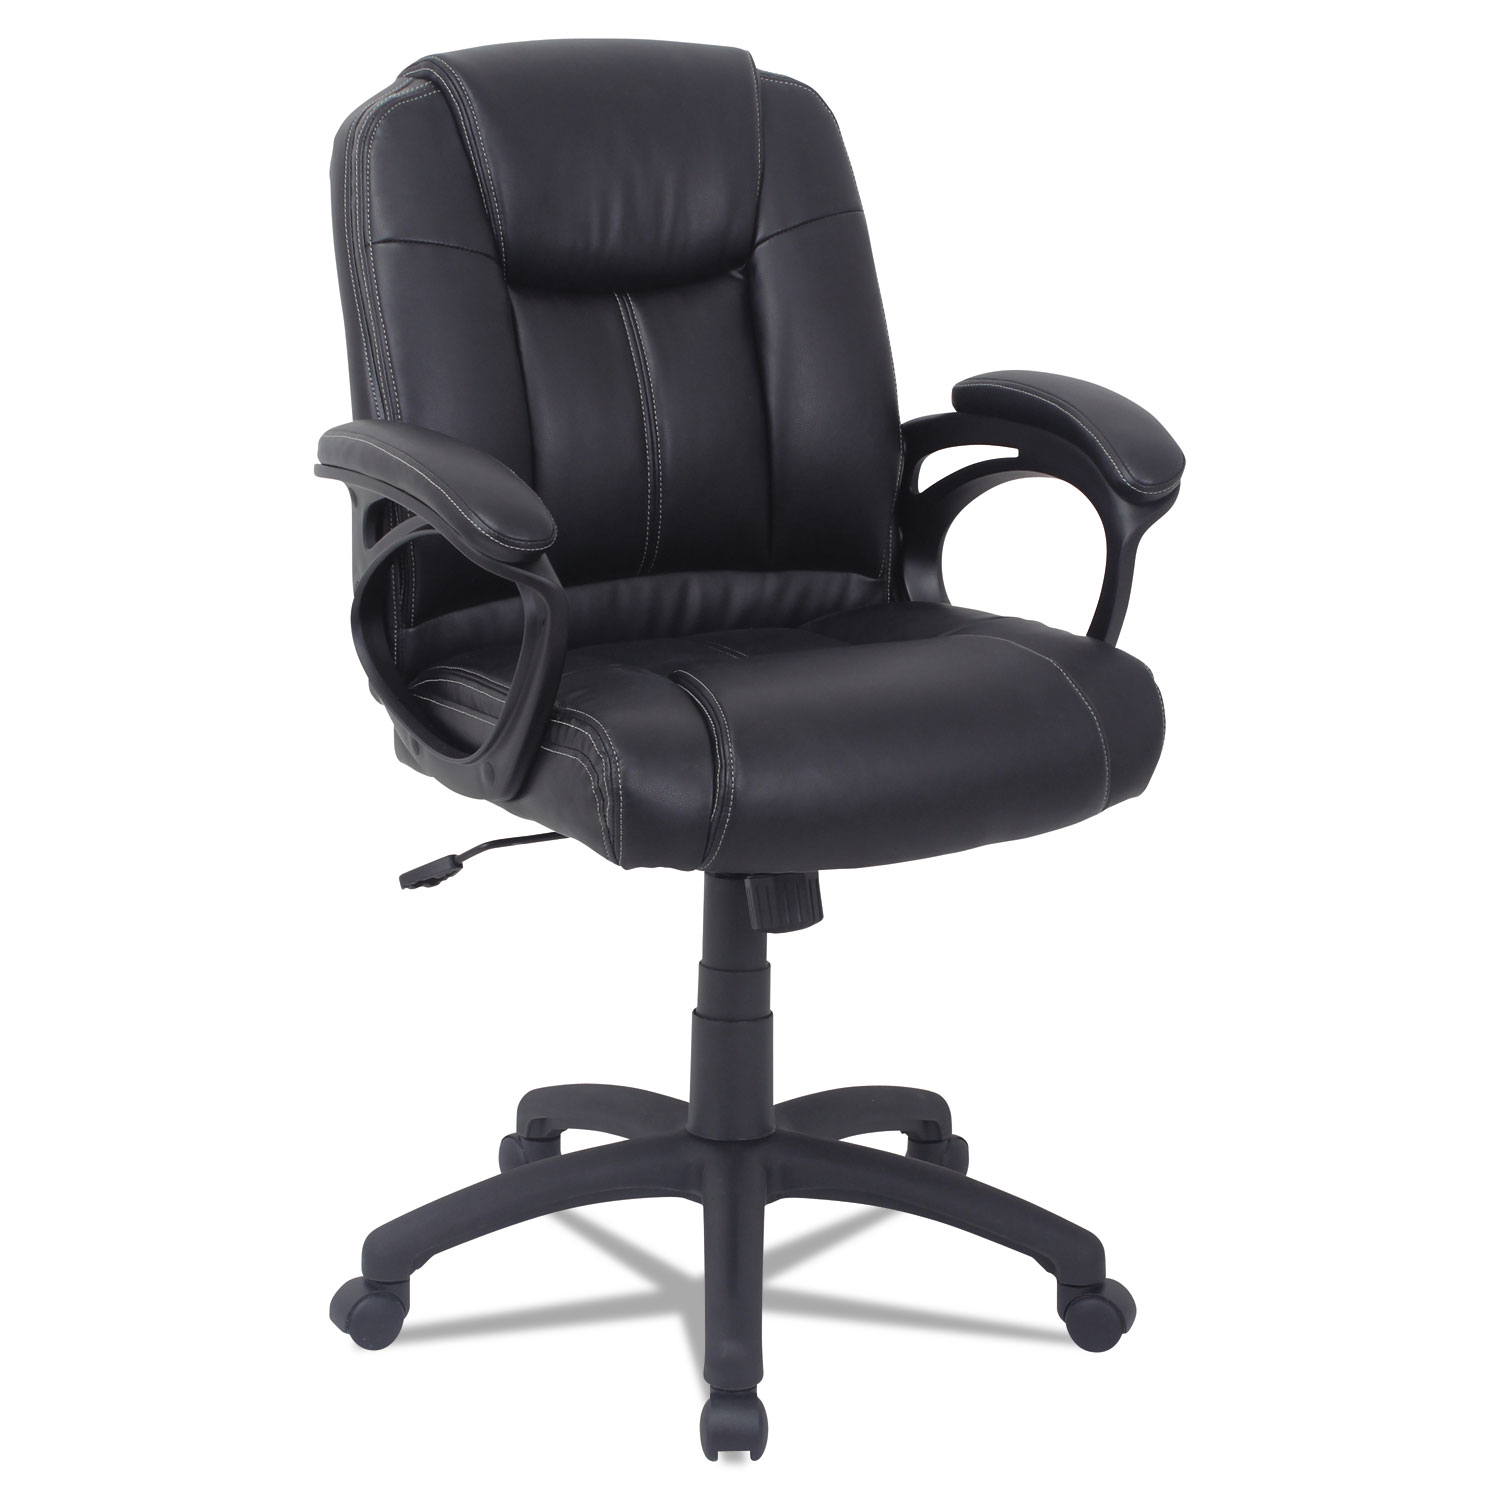  Alera ALECC4219F Alera CC Series Executive Mid-Back Leather Chair, Supports up to 275 lbs., Black Seat/Black Back, Black Base (ALECC4219F) 